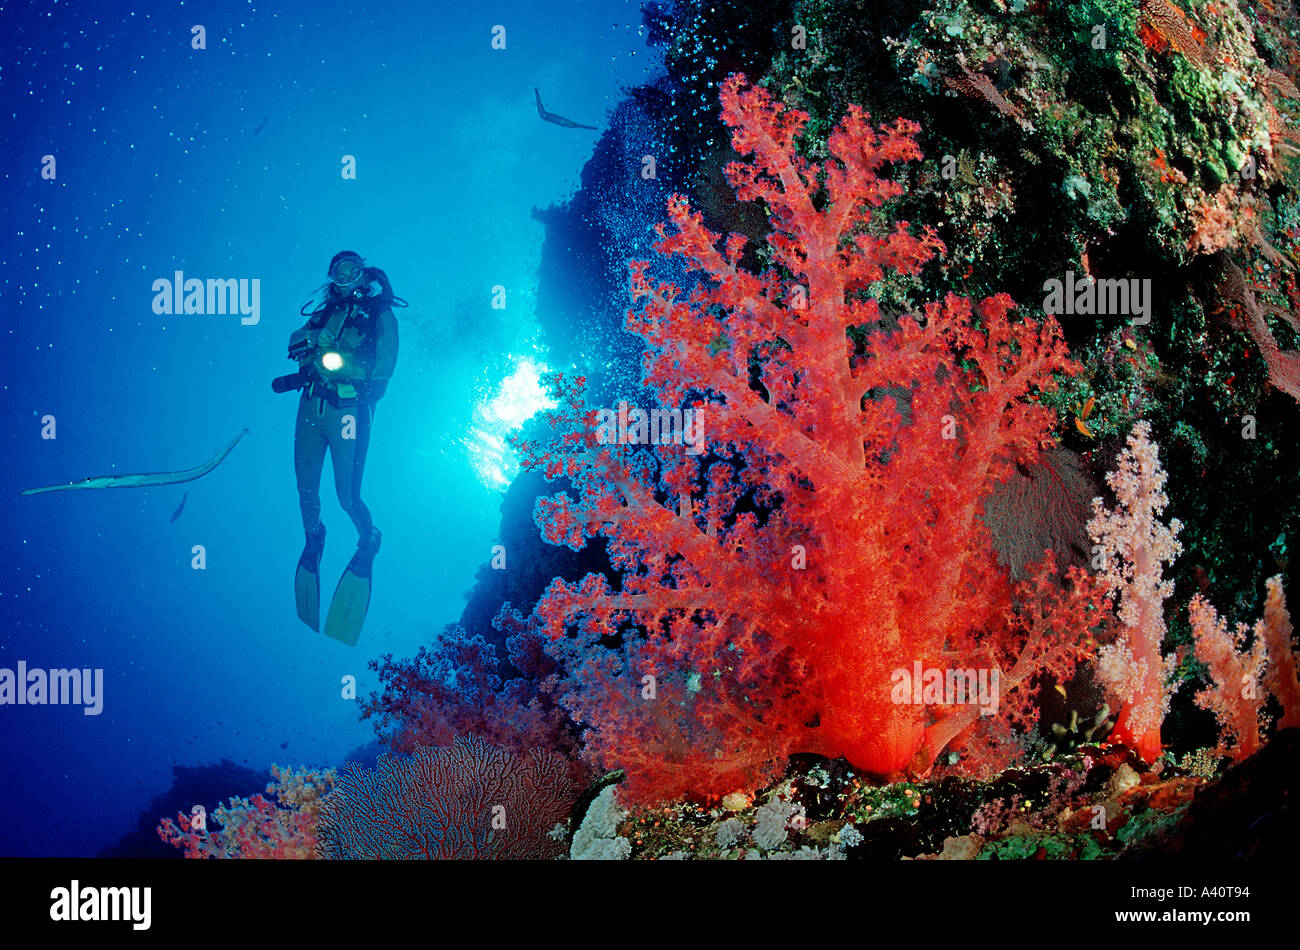 Taucher und Korallenriff scuba diver and coral reef  Stock Photo